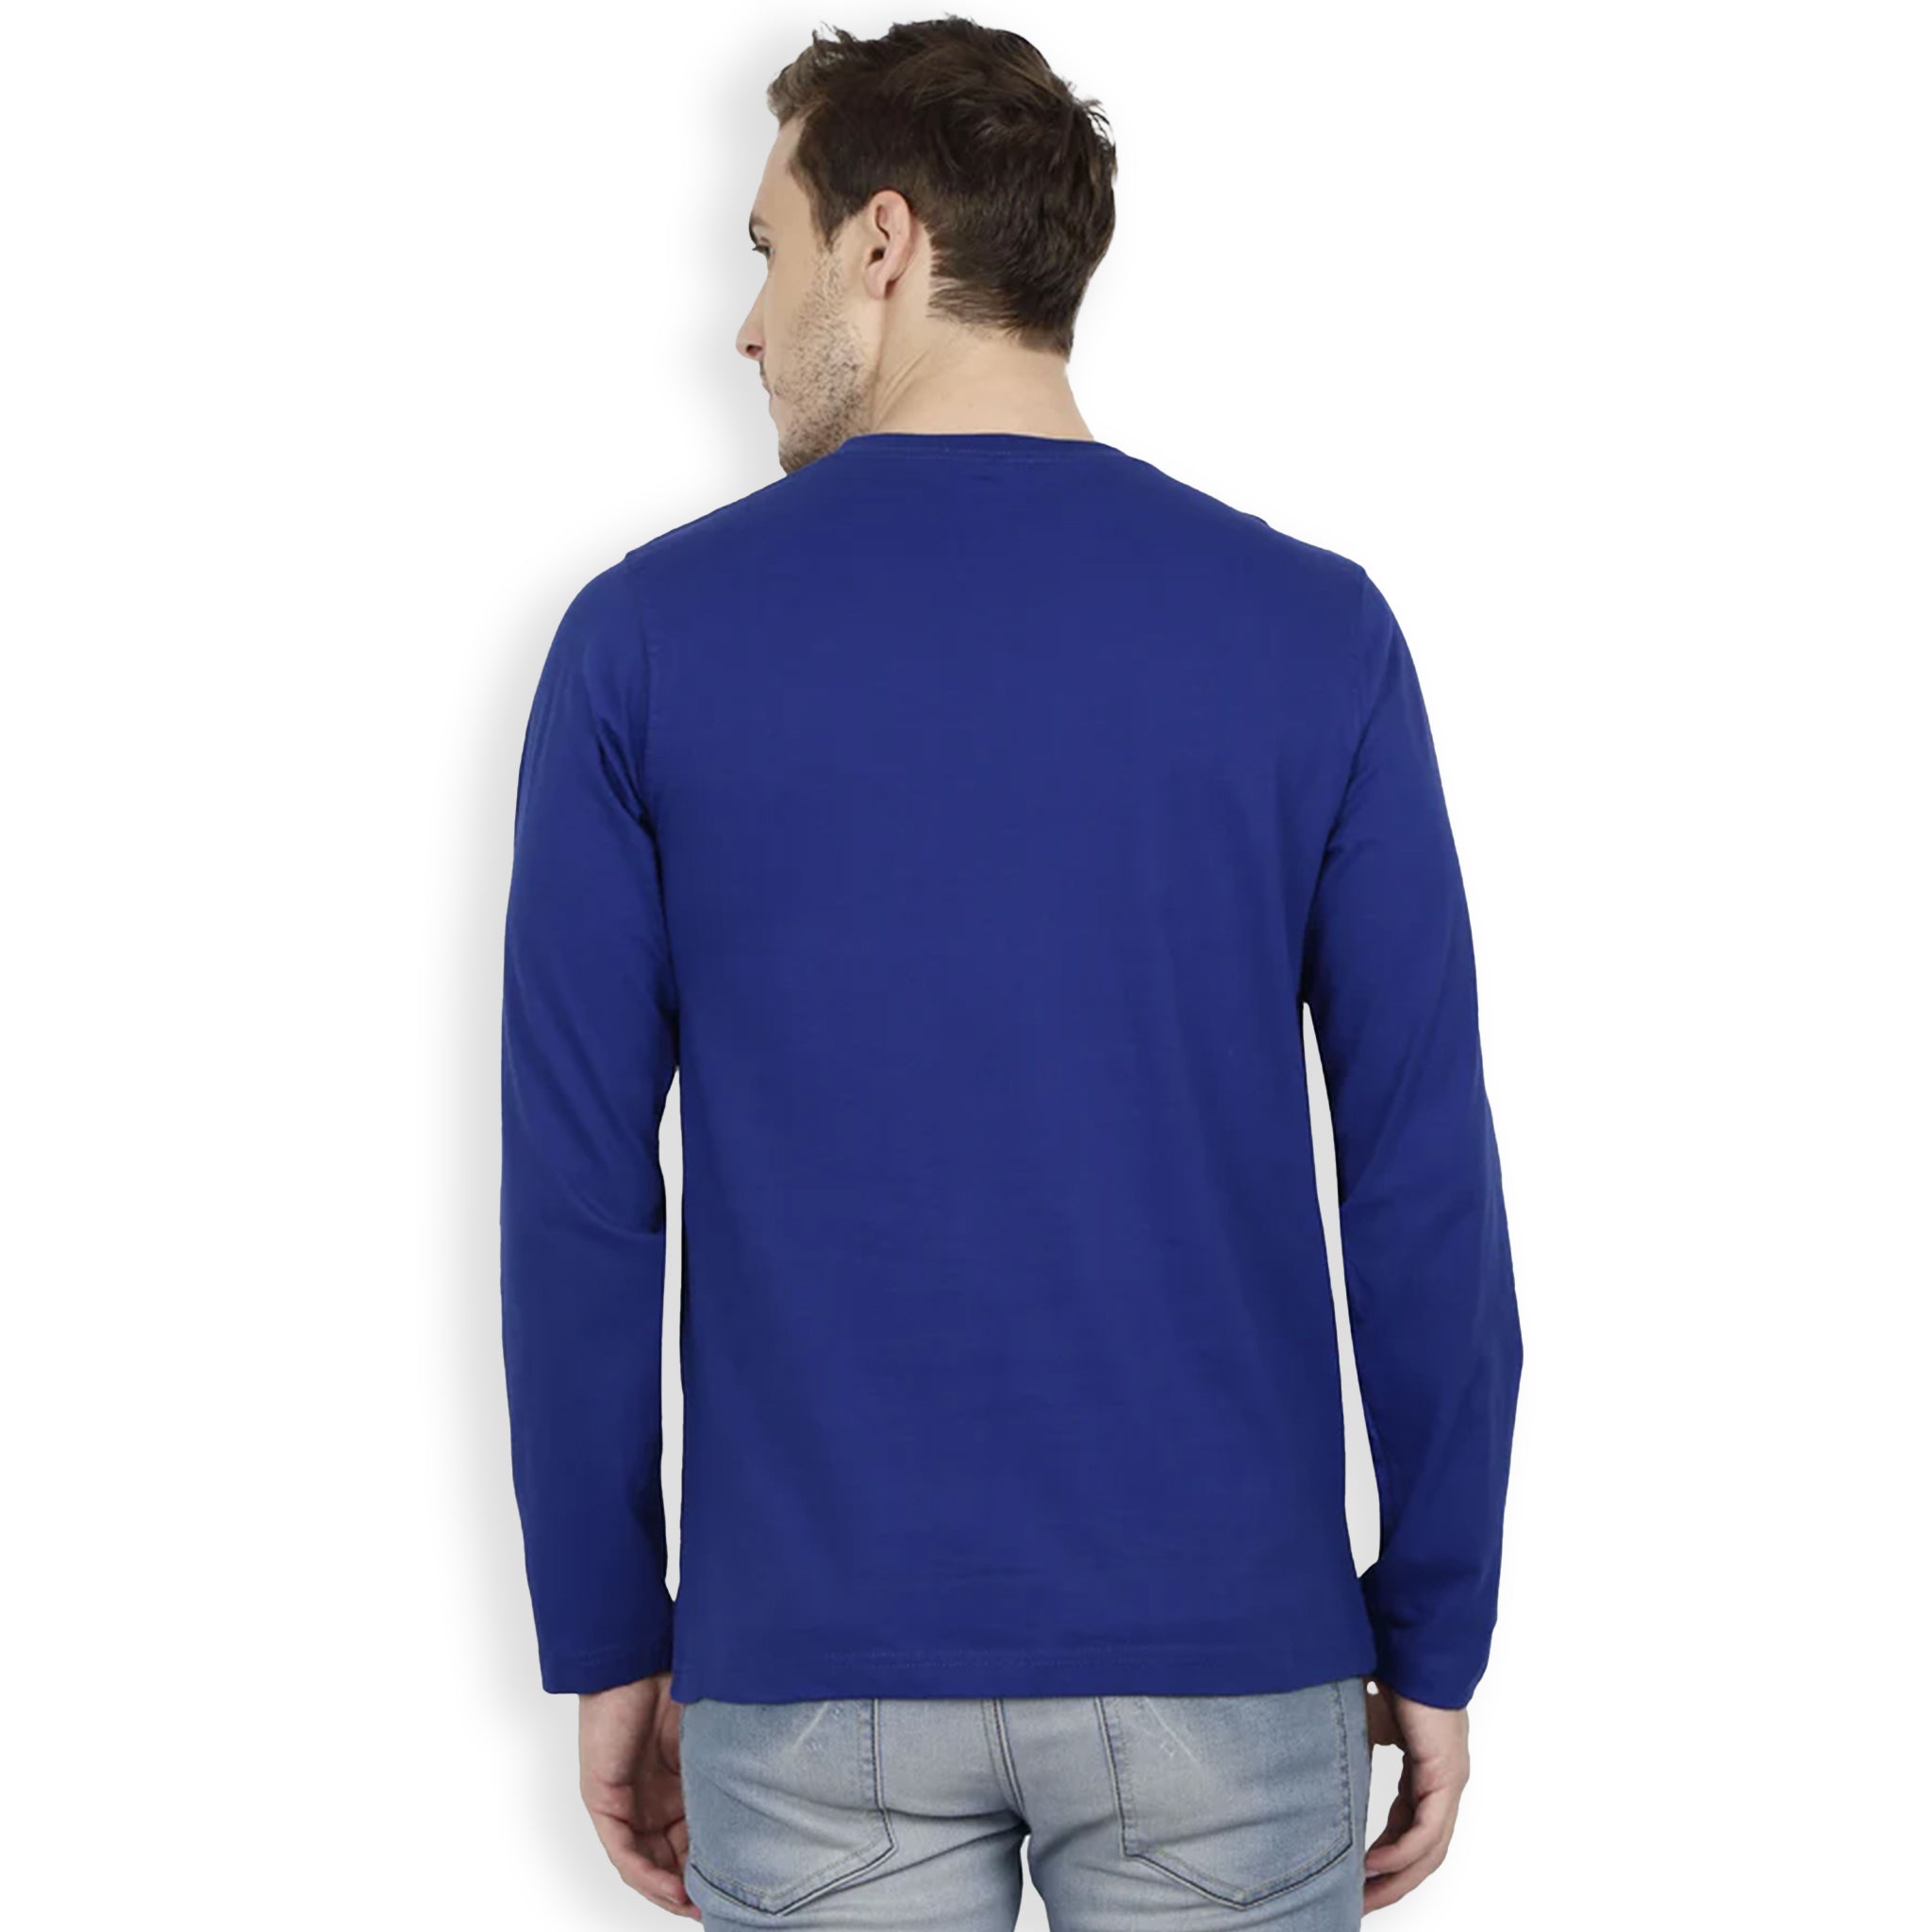 Bizzar's Royal Blue Full Sleeve T-Shirt